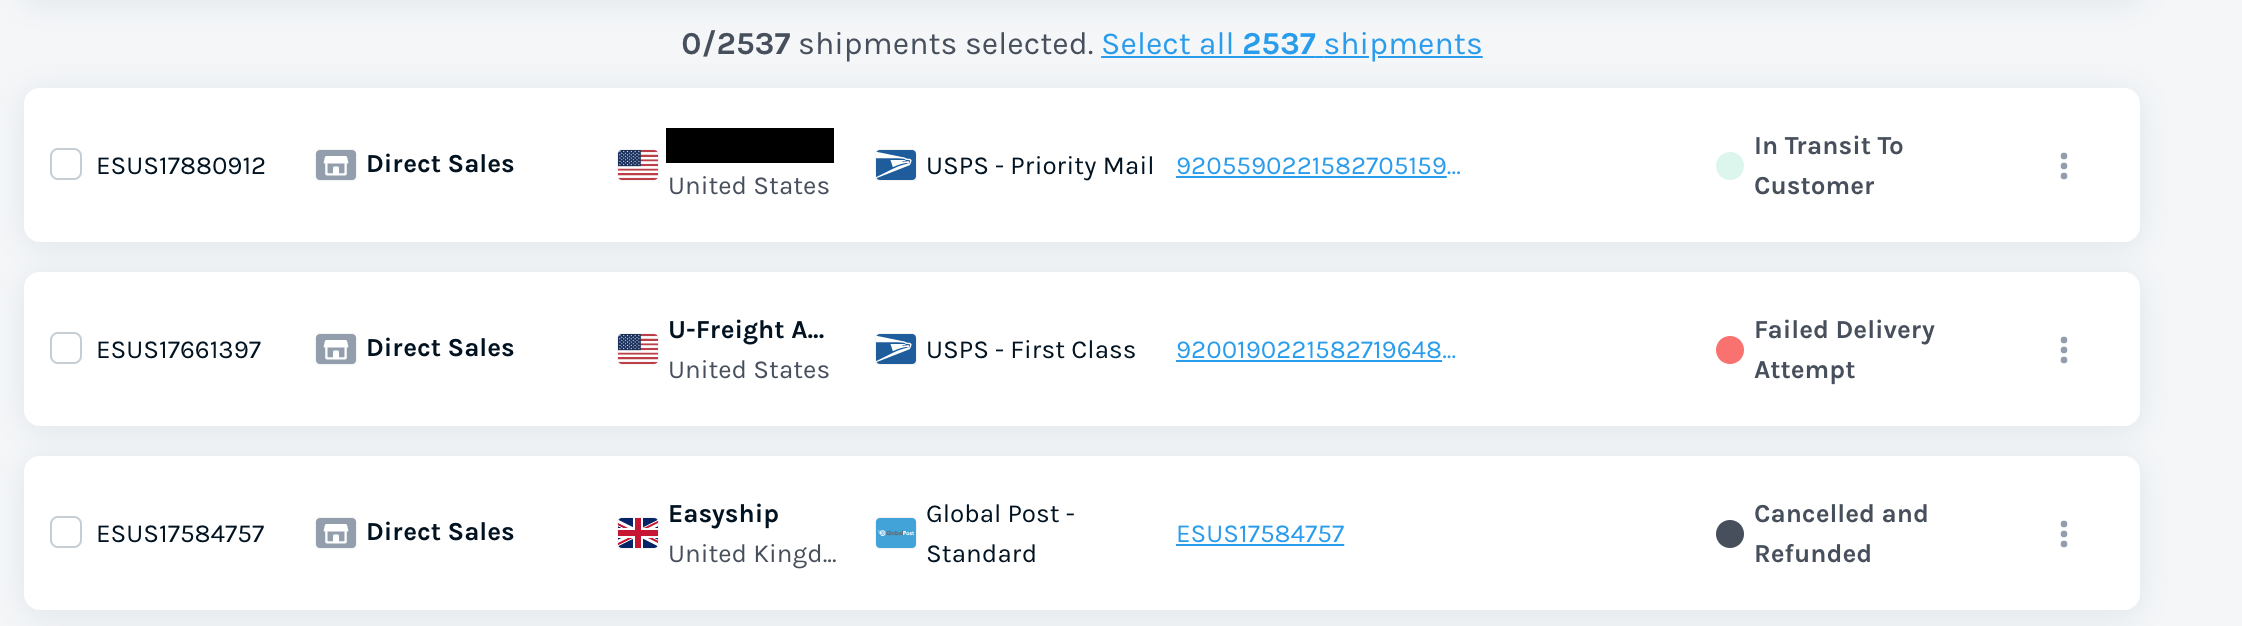 Shipments List Example